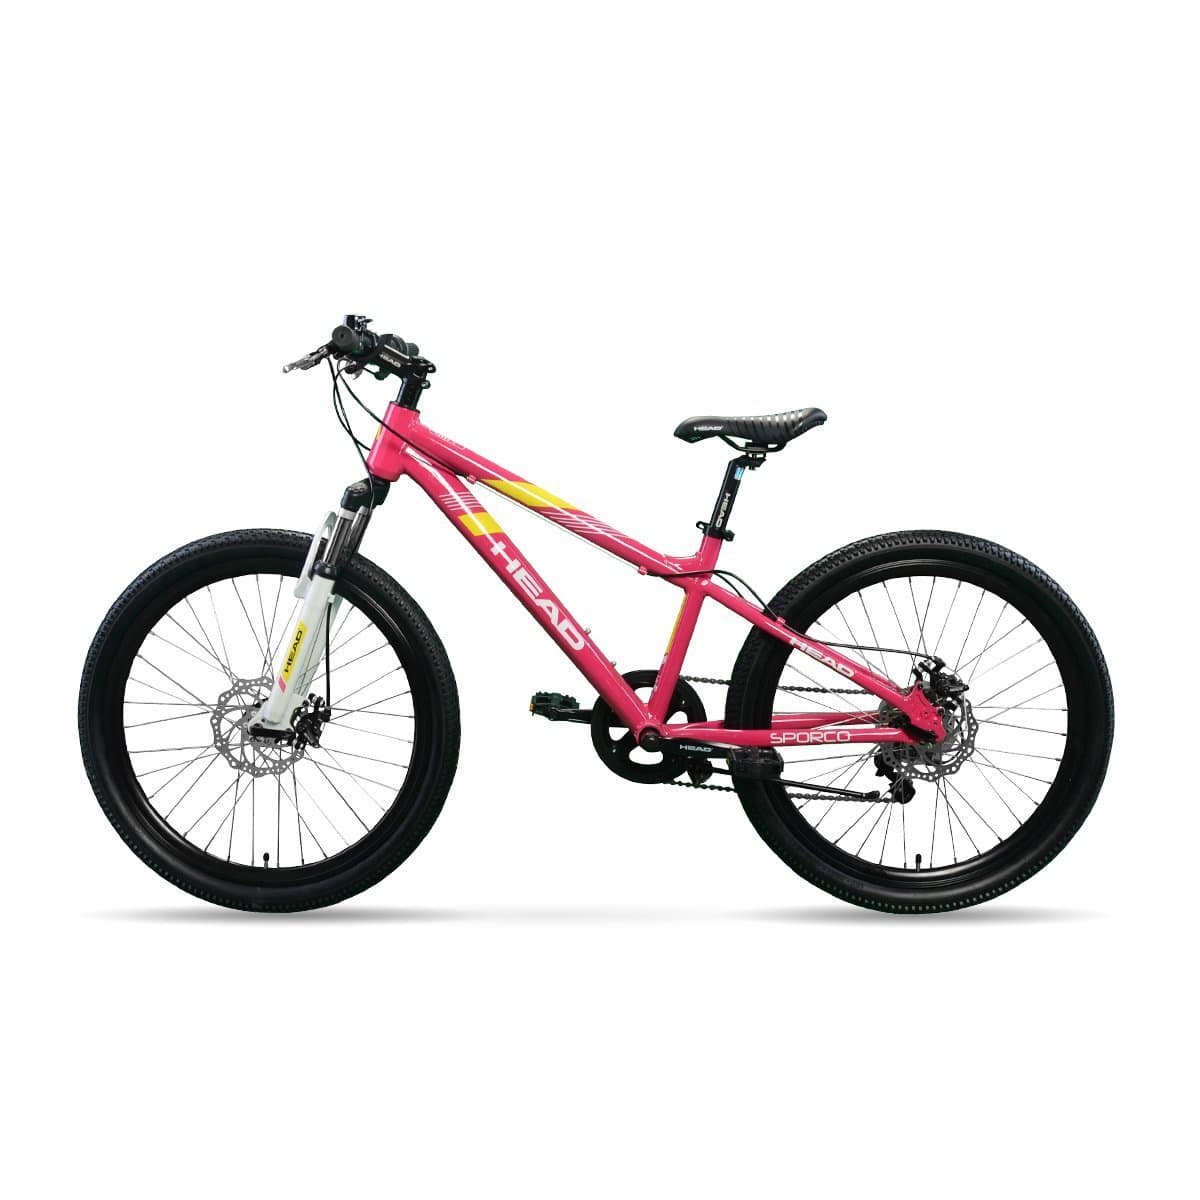 Head Sporco 24" Kids Bike - Pink